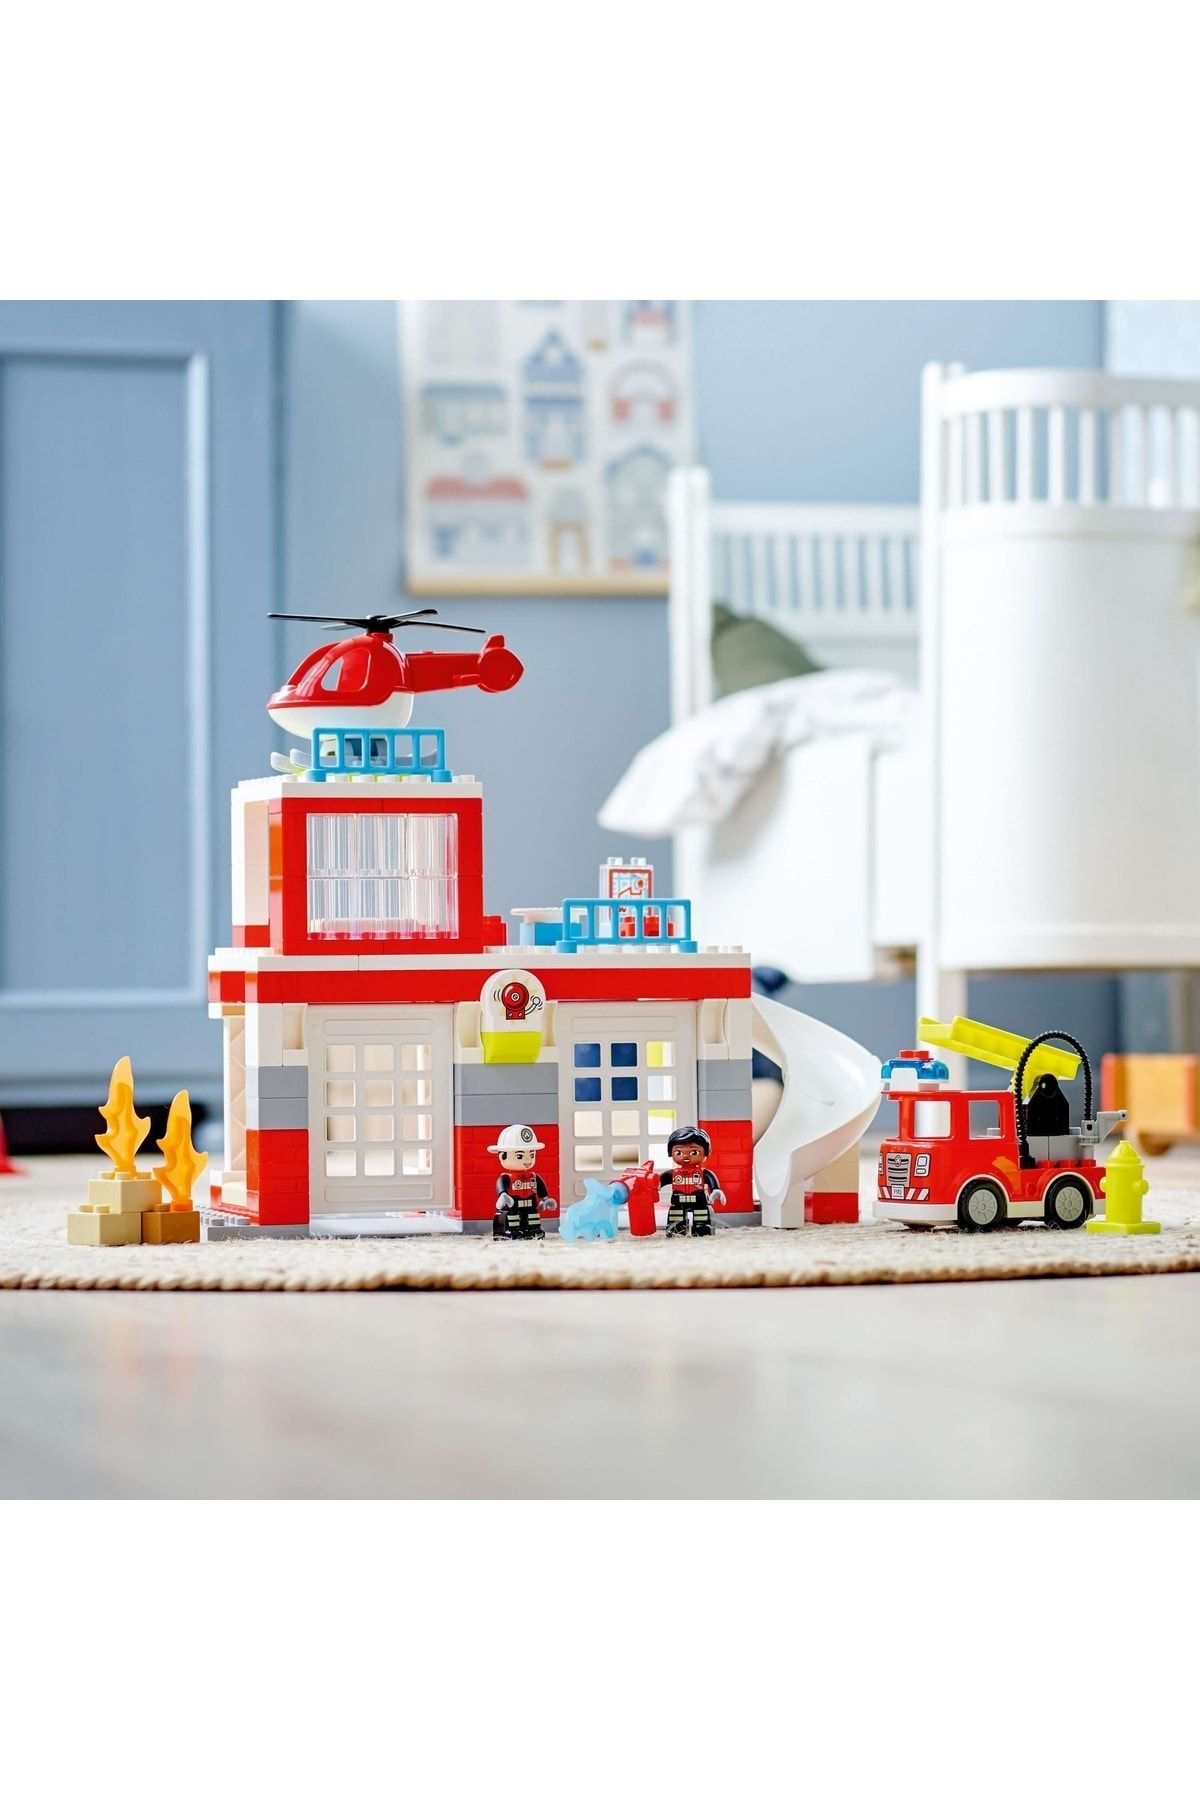 LEGO لگو ایستگاه آتش نشانی و هلیکوپتر نجات Duplo 10970 - ست ساختمان برای کودکان نوپا (117 قطعه)